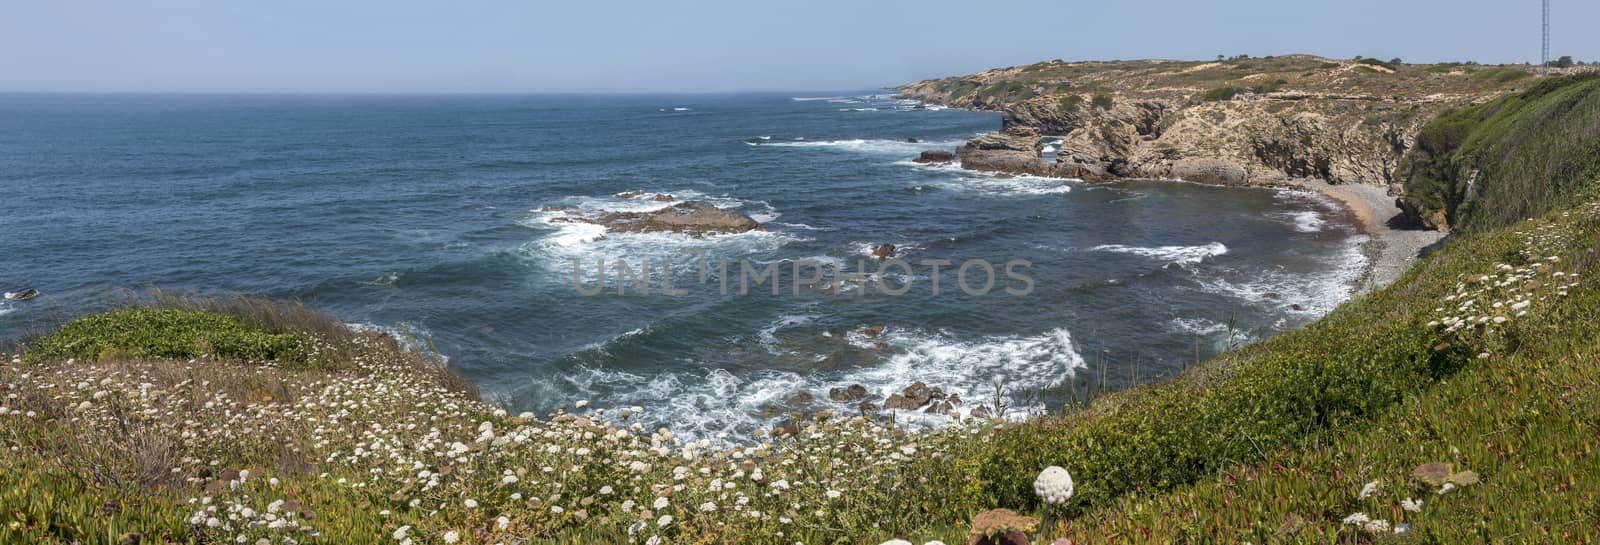 Landscape view of rocks formations on Alentejo coastline.